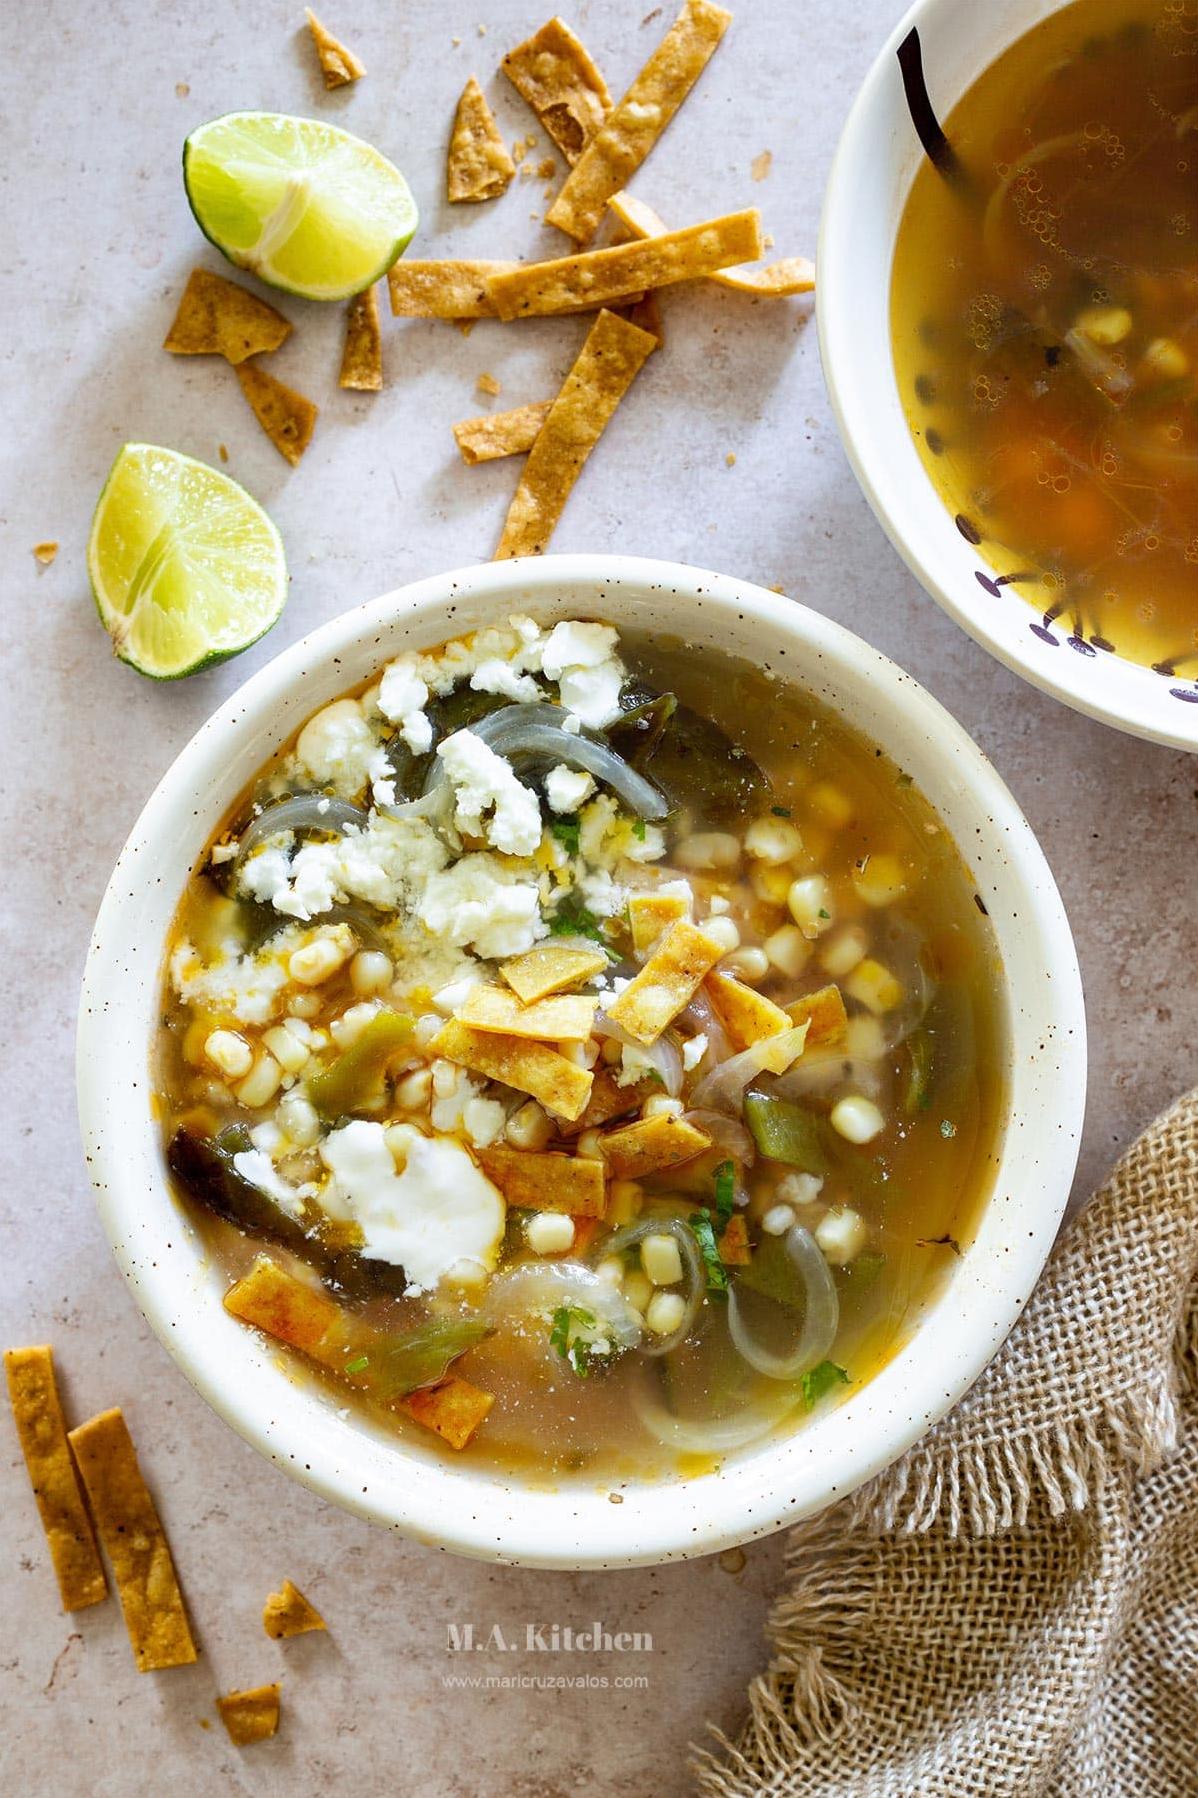  Feel the warmth of Mexico in each delicious bite with Sopa De Maiz.